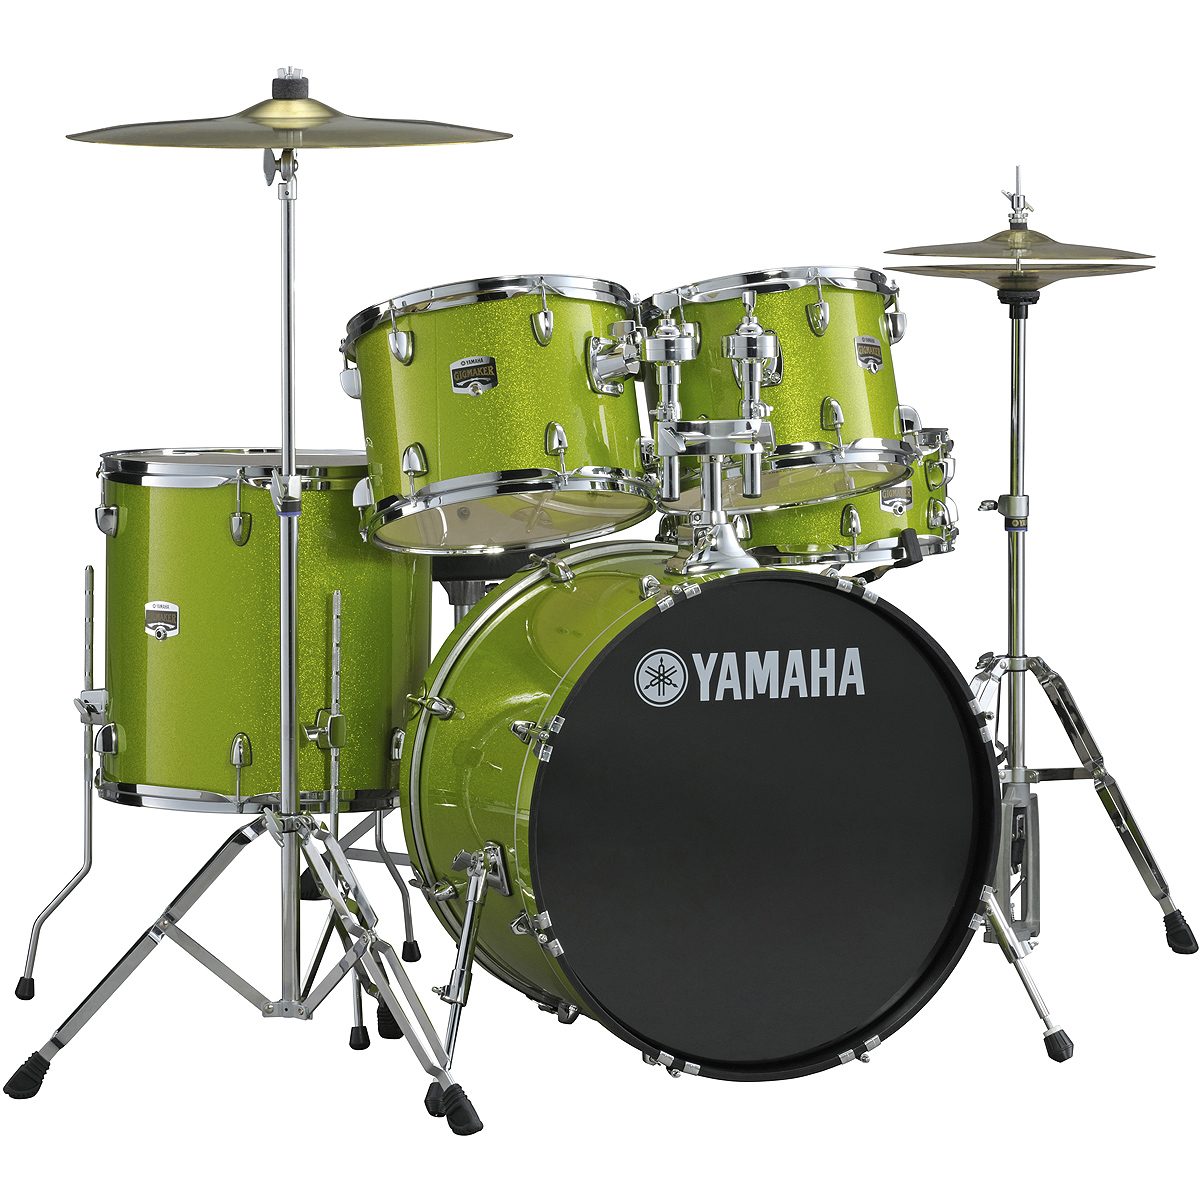 GigMaker Drum Set - Overview - Drum Sets - Acoustic Drums - Drums